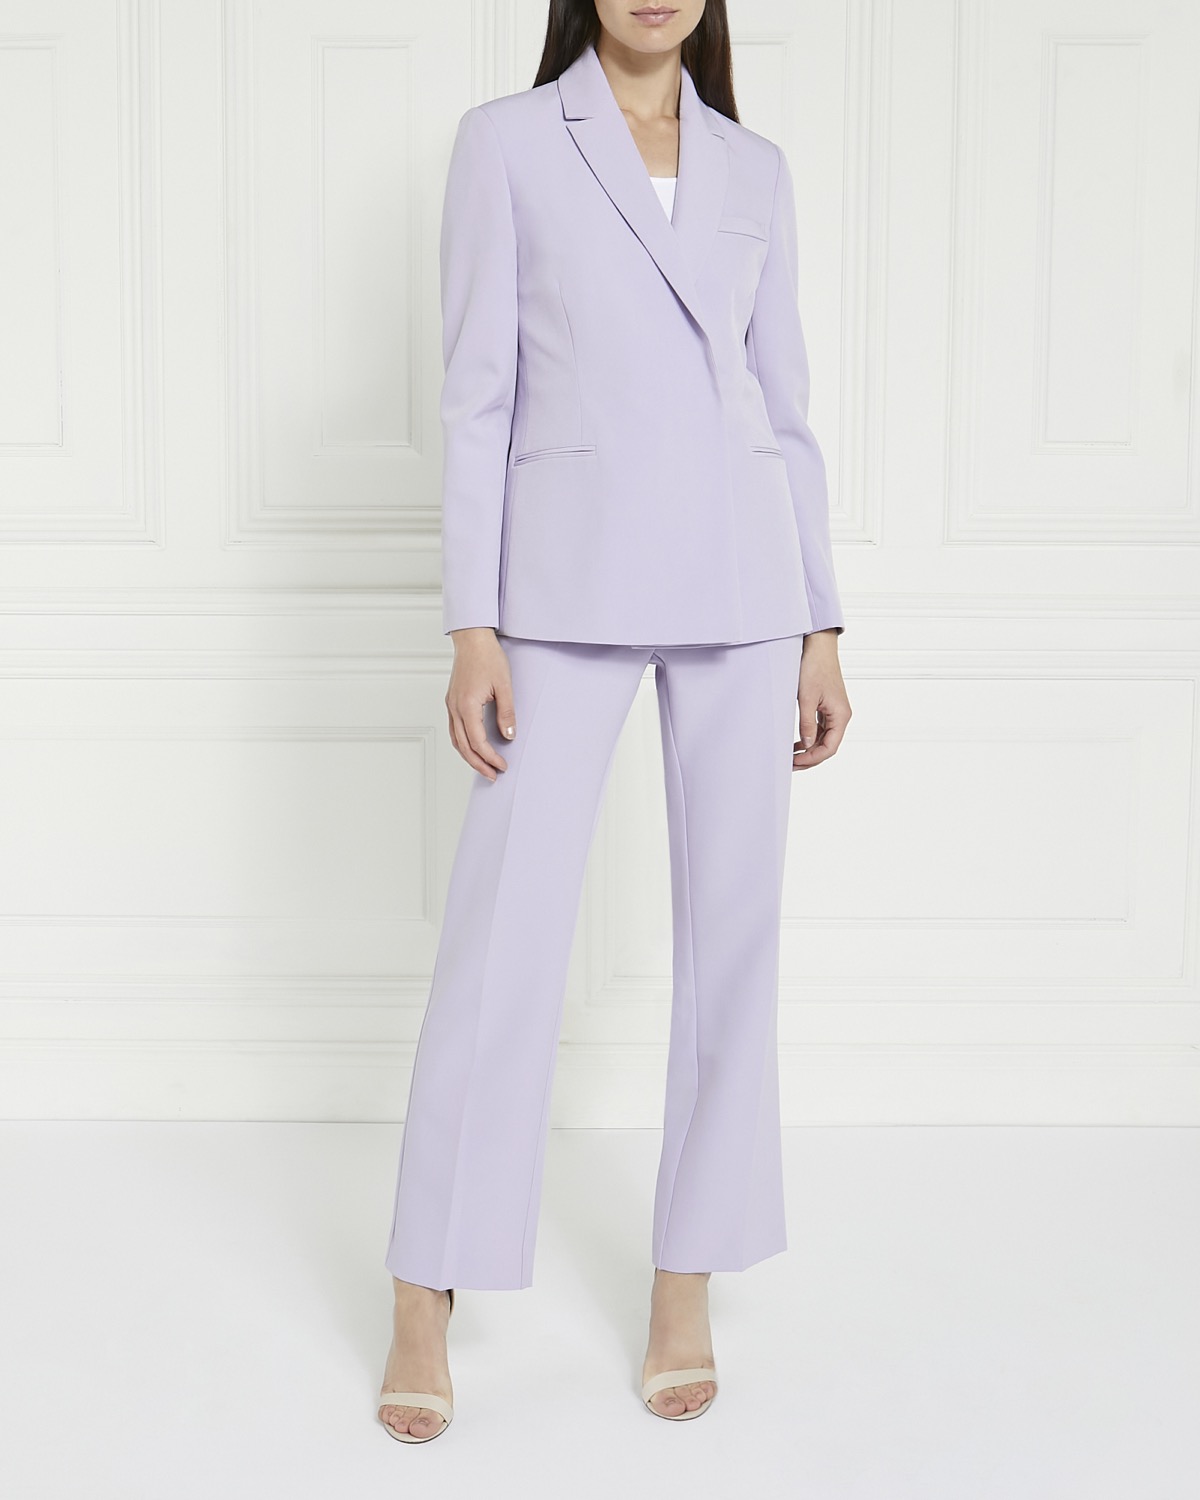 Lavender Formal Pantsuit for Women Business Women Suit With  Etsy Singapore